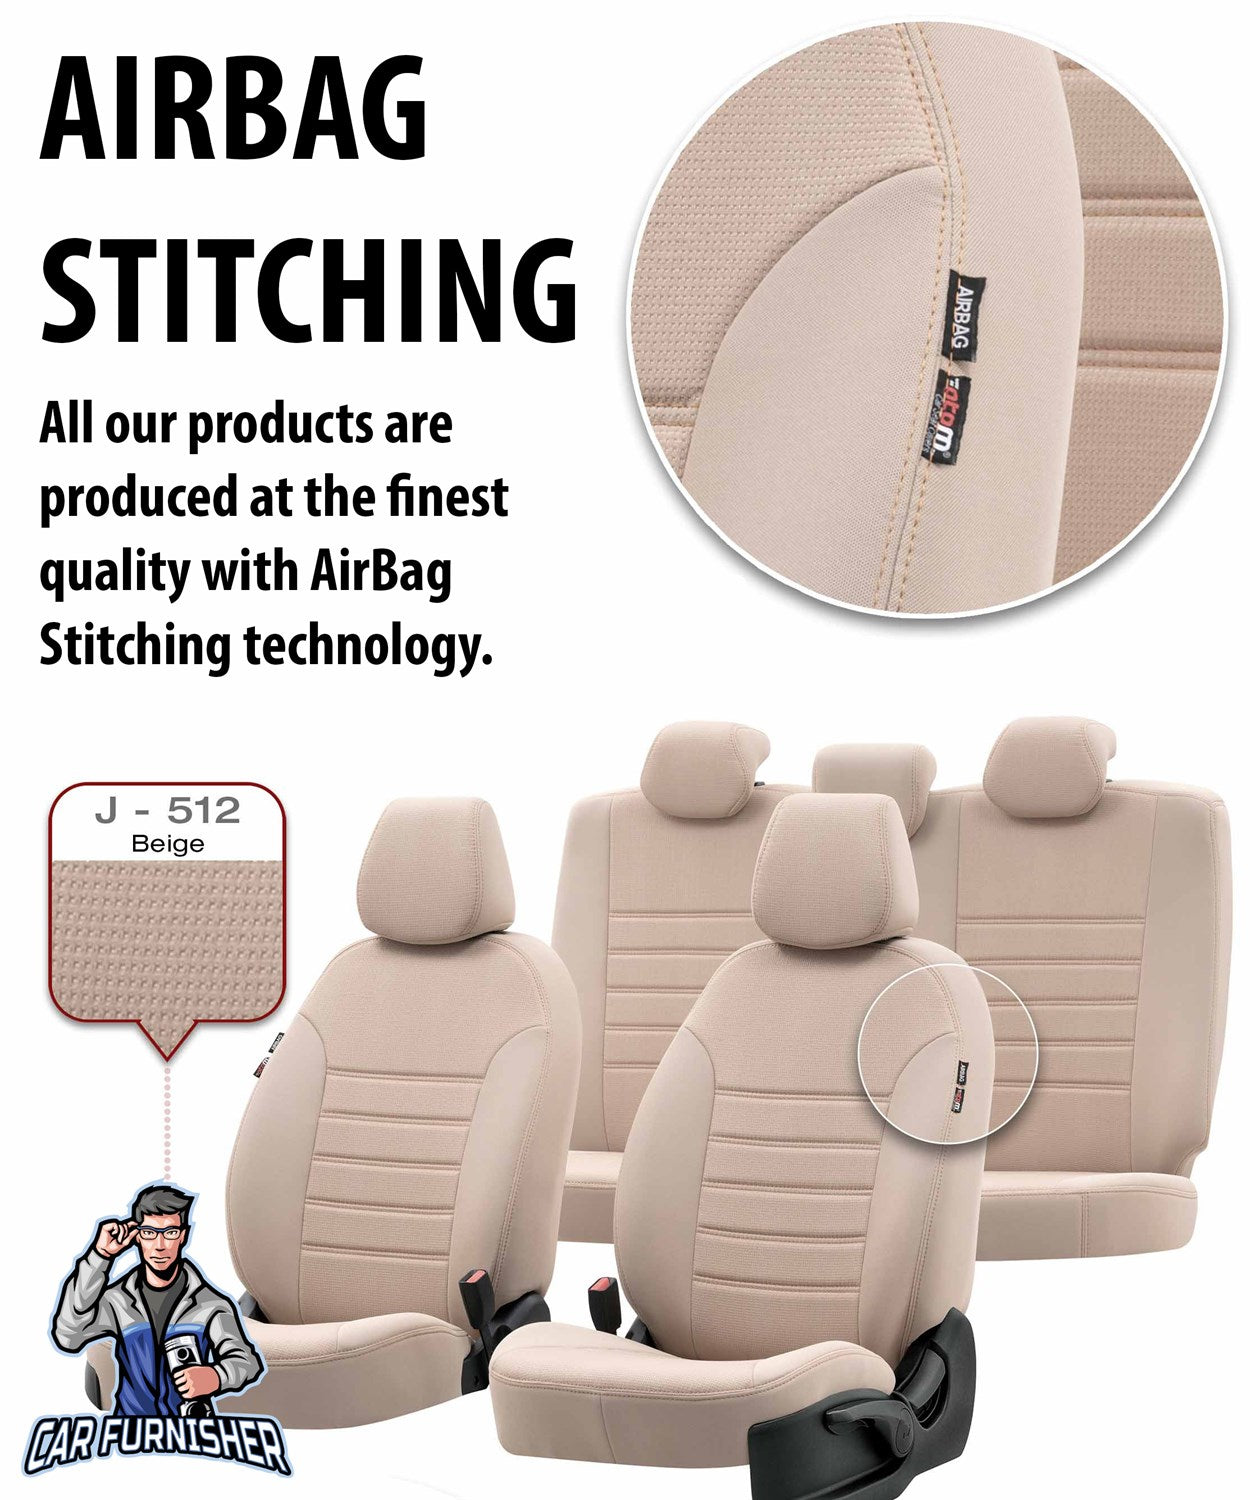 Dacia Logan Seat Covers Original Jacquard Design Light Gray Jacquard Fabric